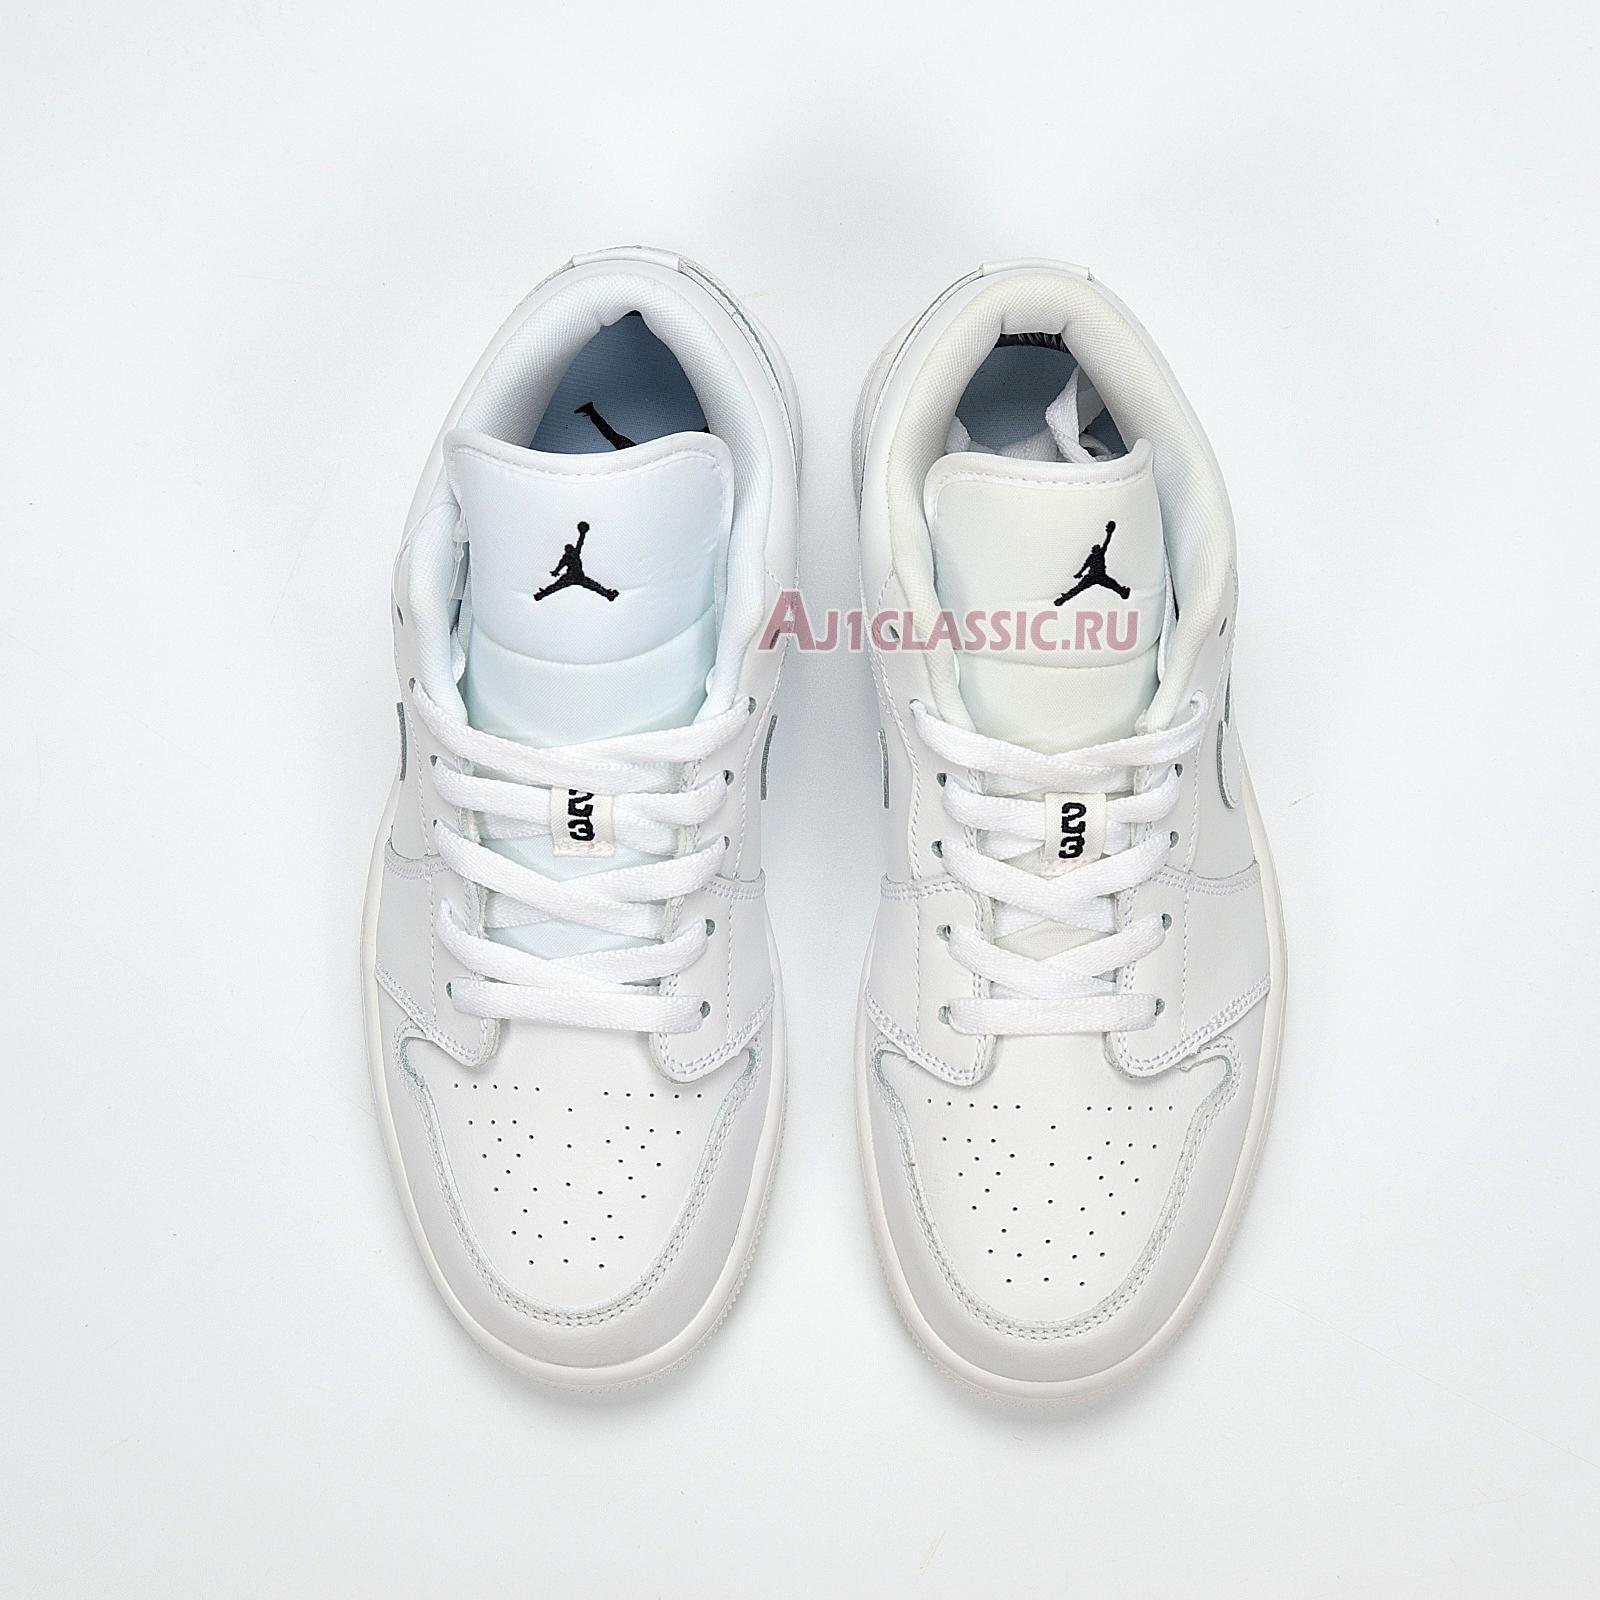 Air Jordan 1 Low "White Black" 553560-101